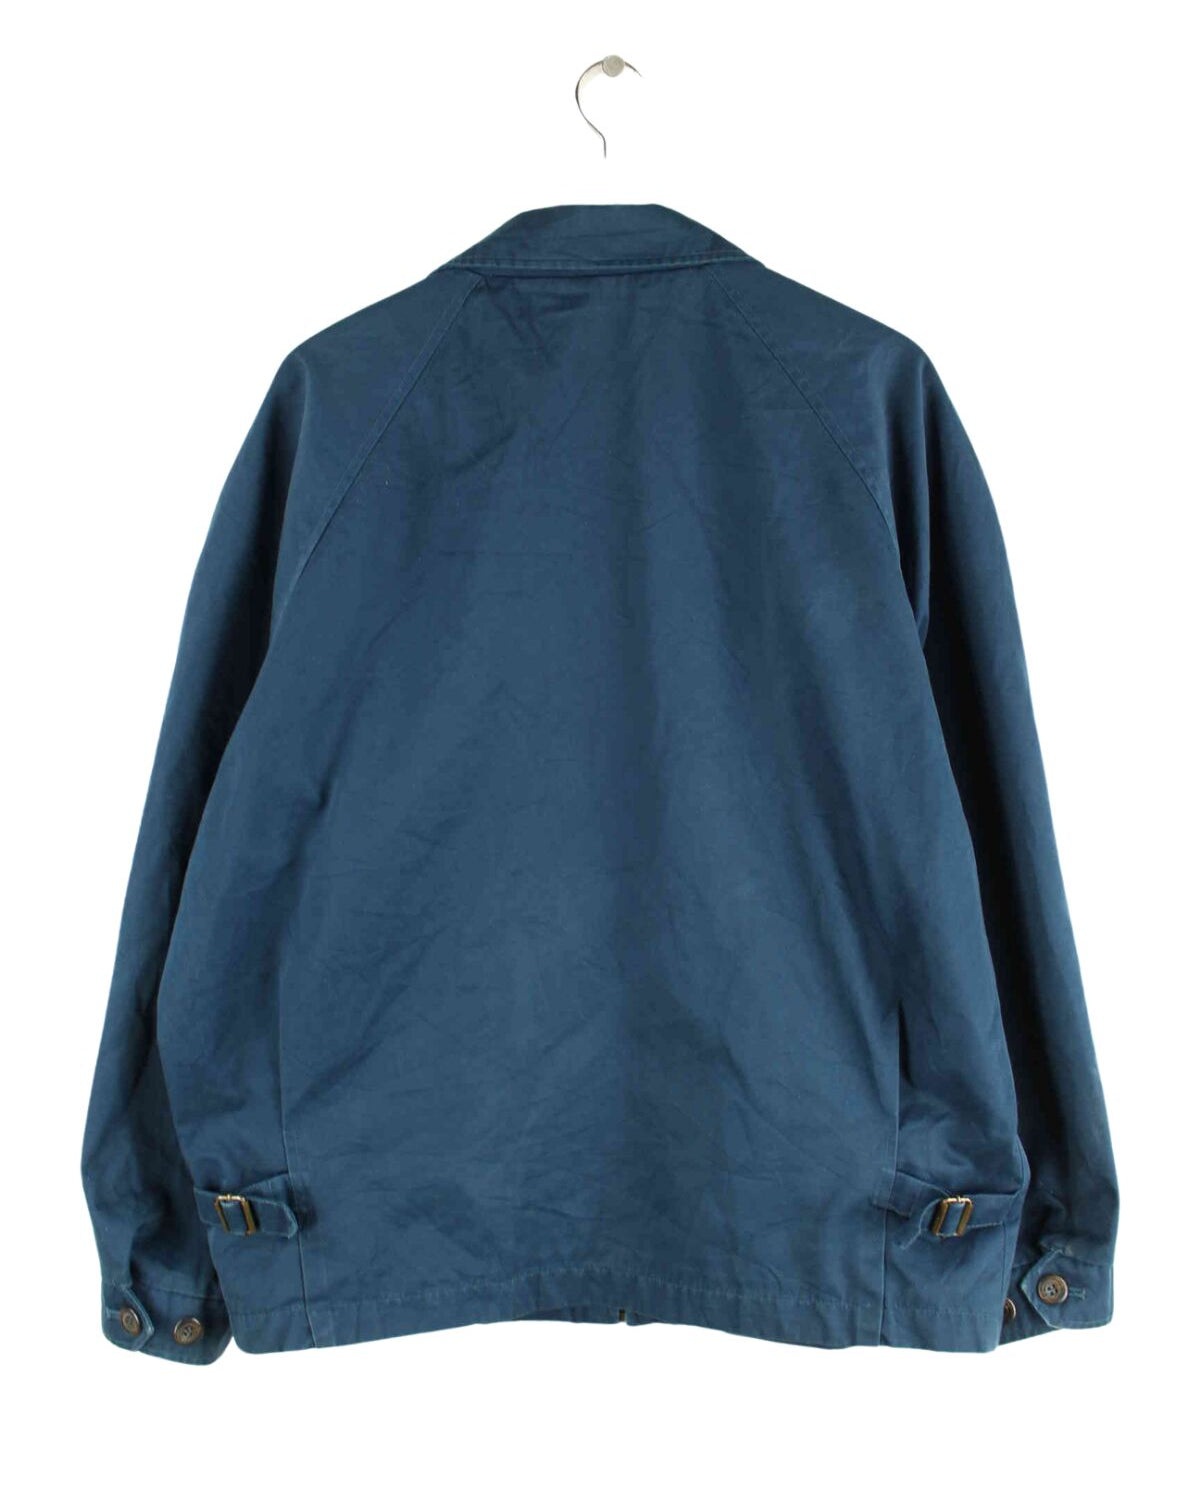 Lacoste 90s Vintage Harrington Jacke Blau L (back image)